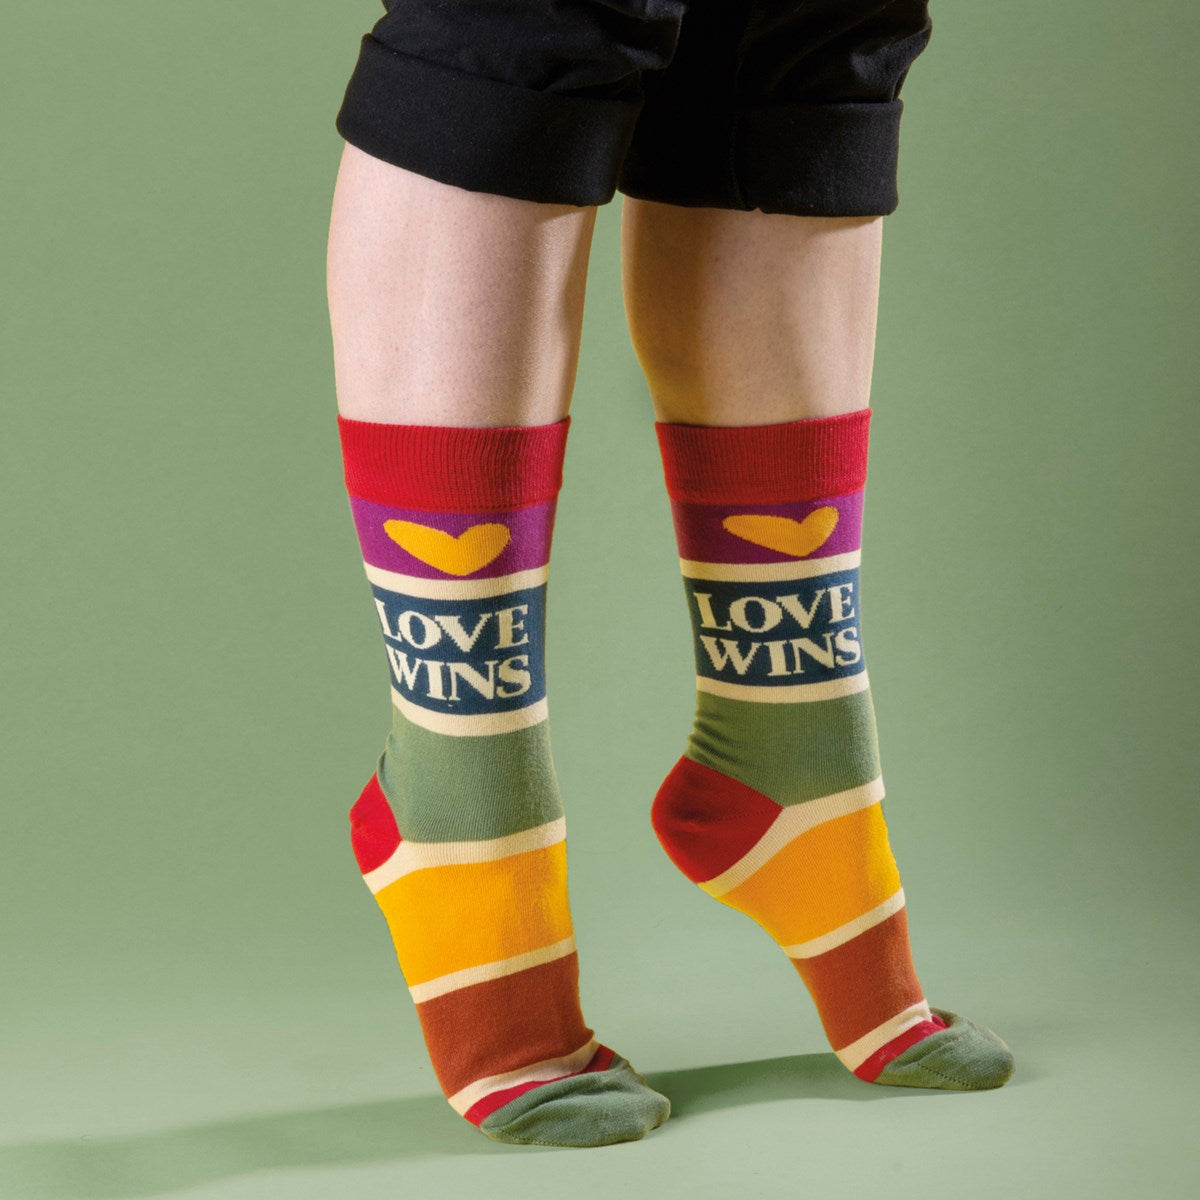 Socks - "Love Wins"